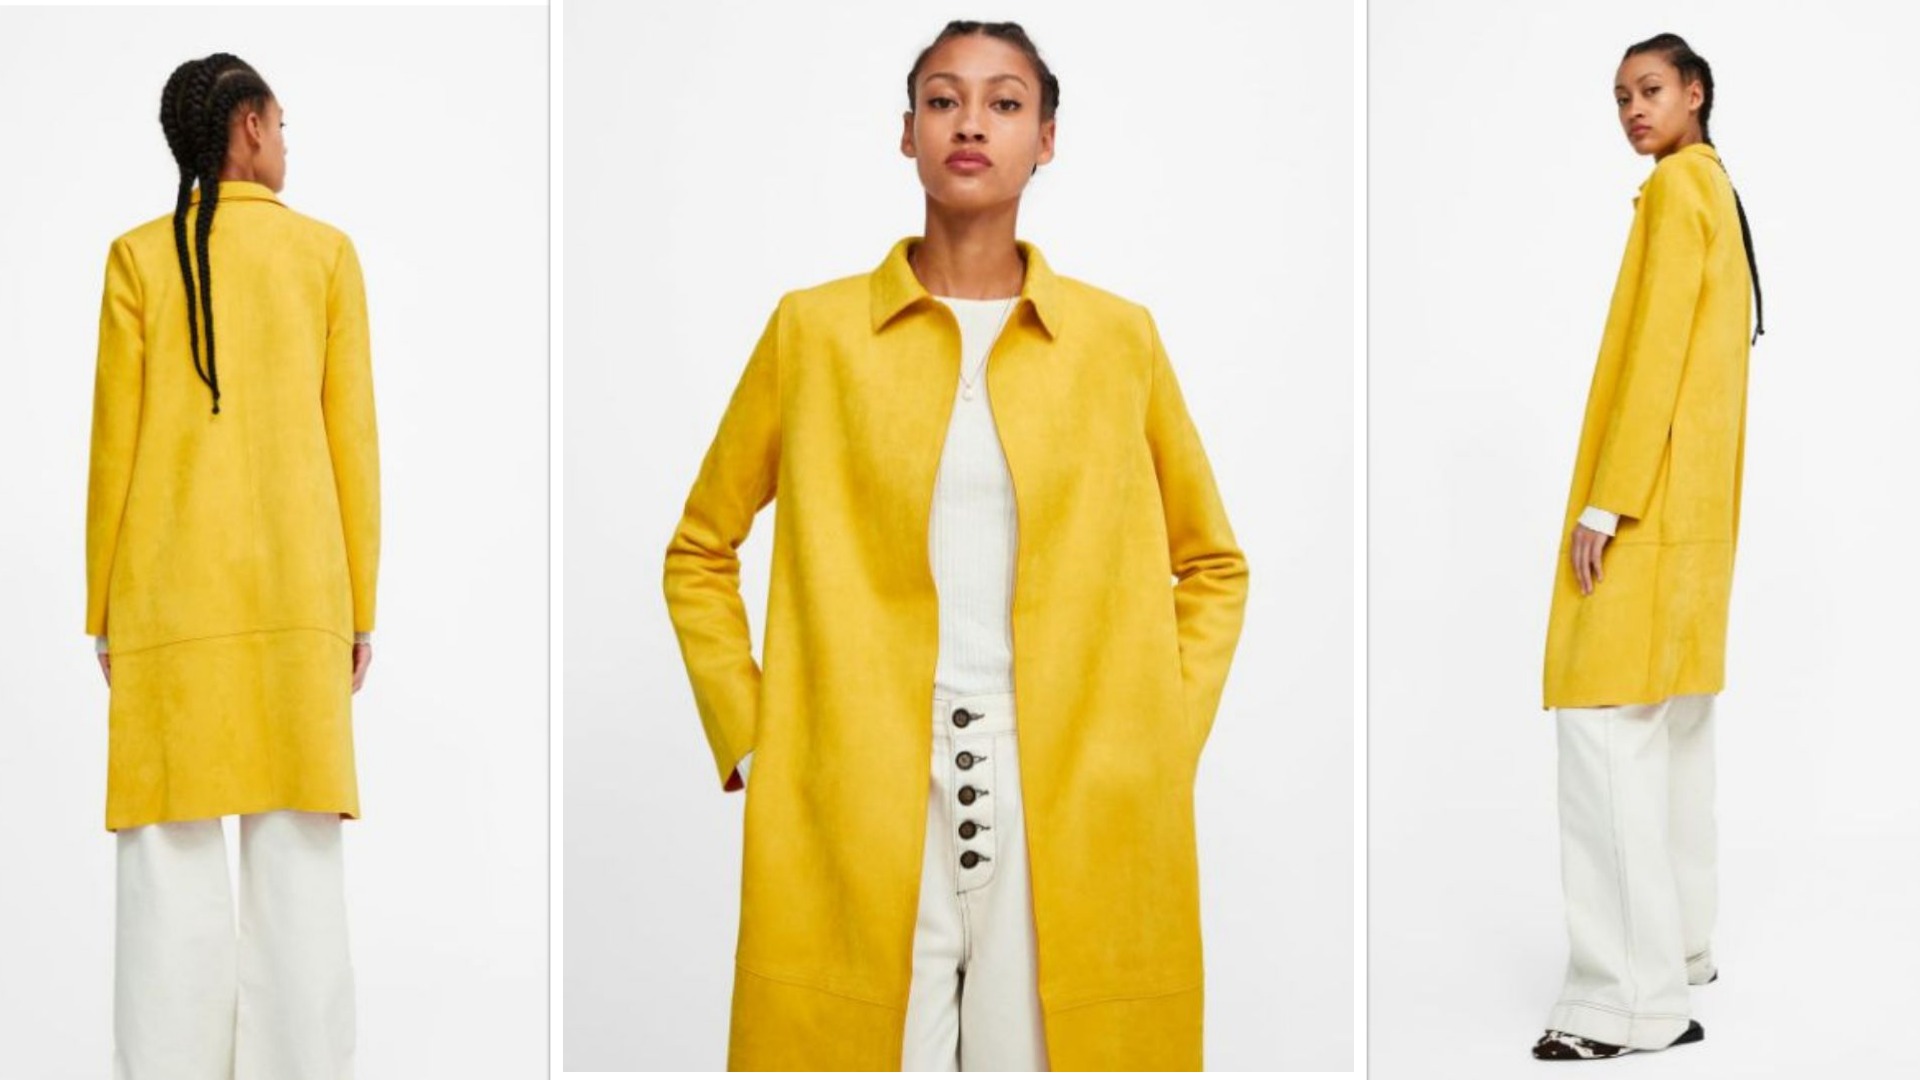 Así se ve mi tapado amarilloen el catálogo on line de Zara. 